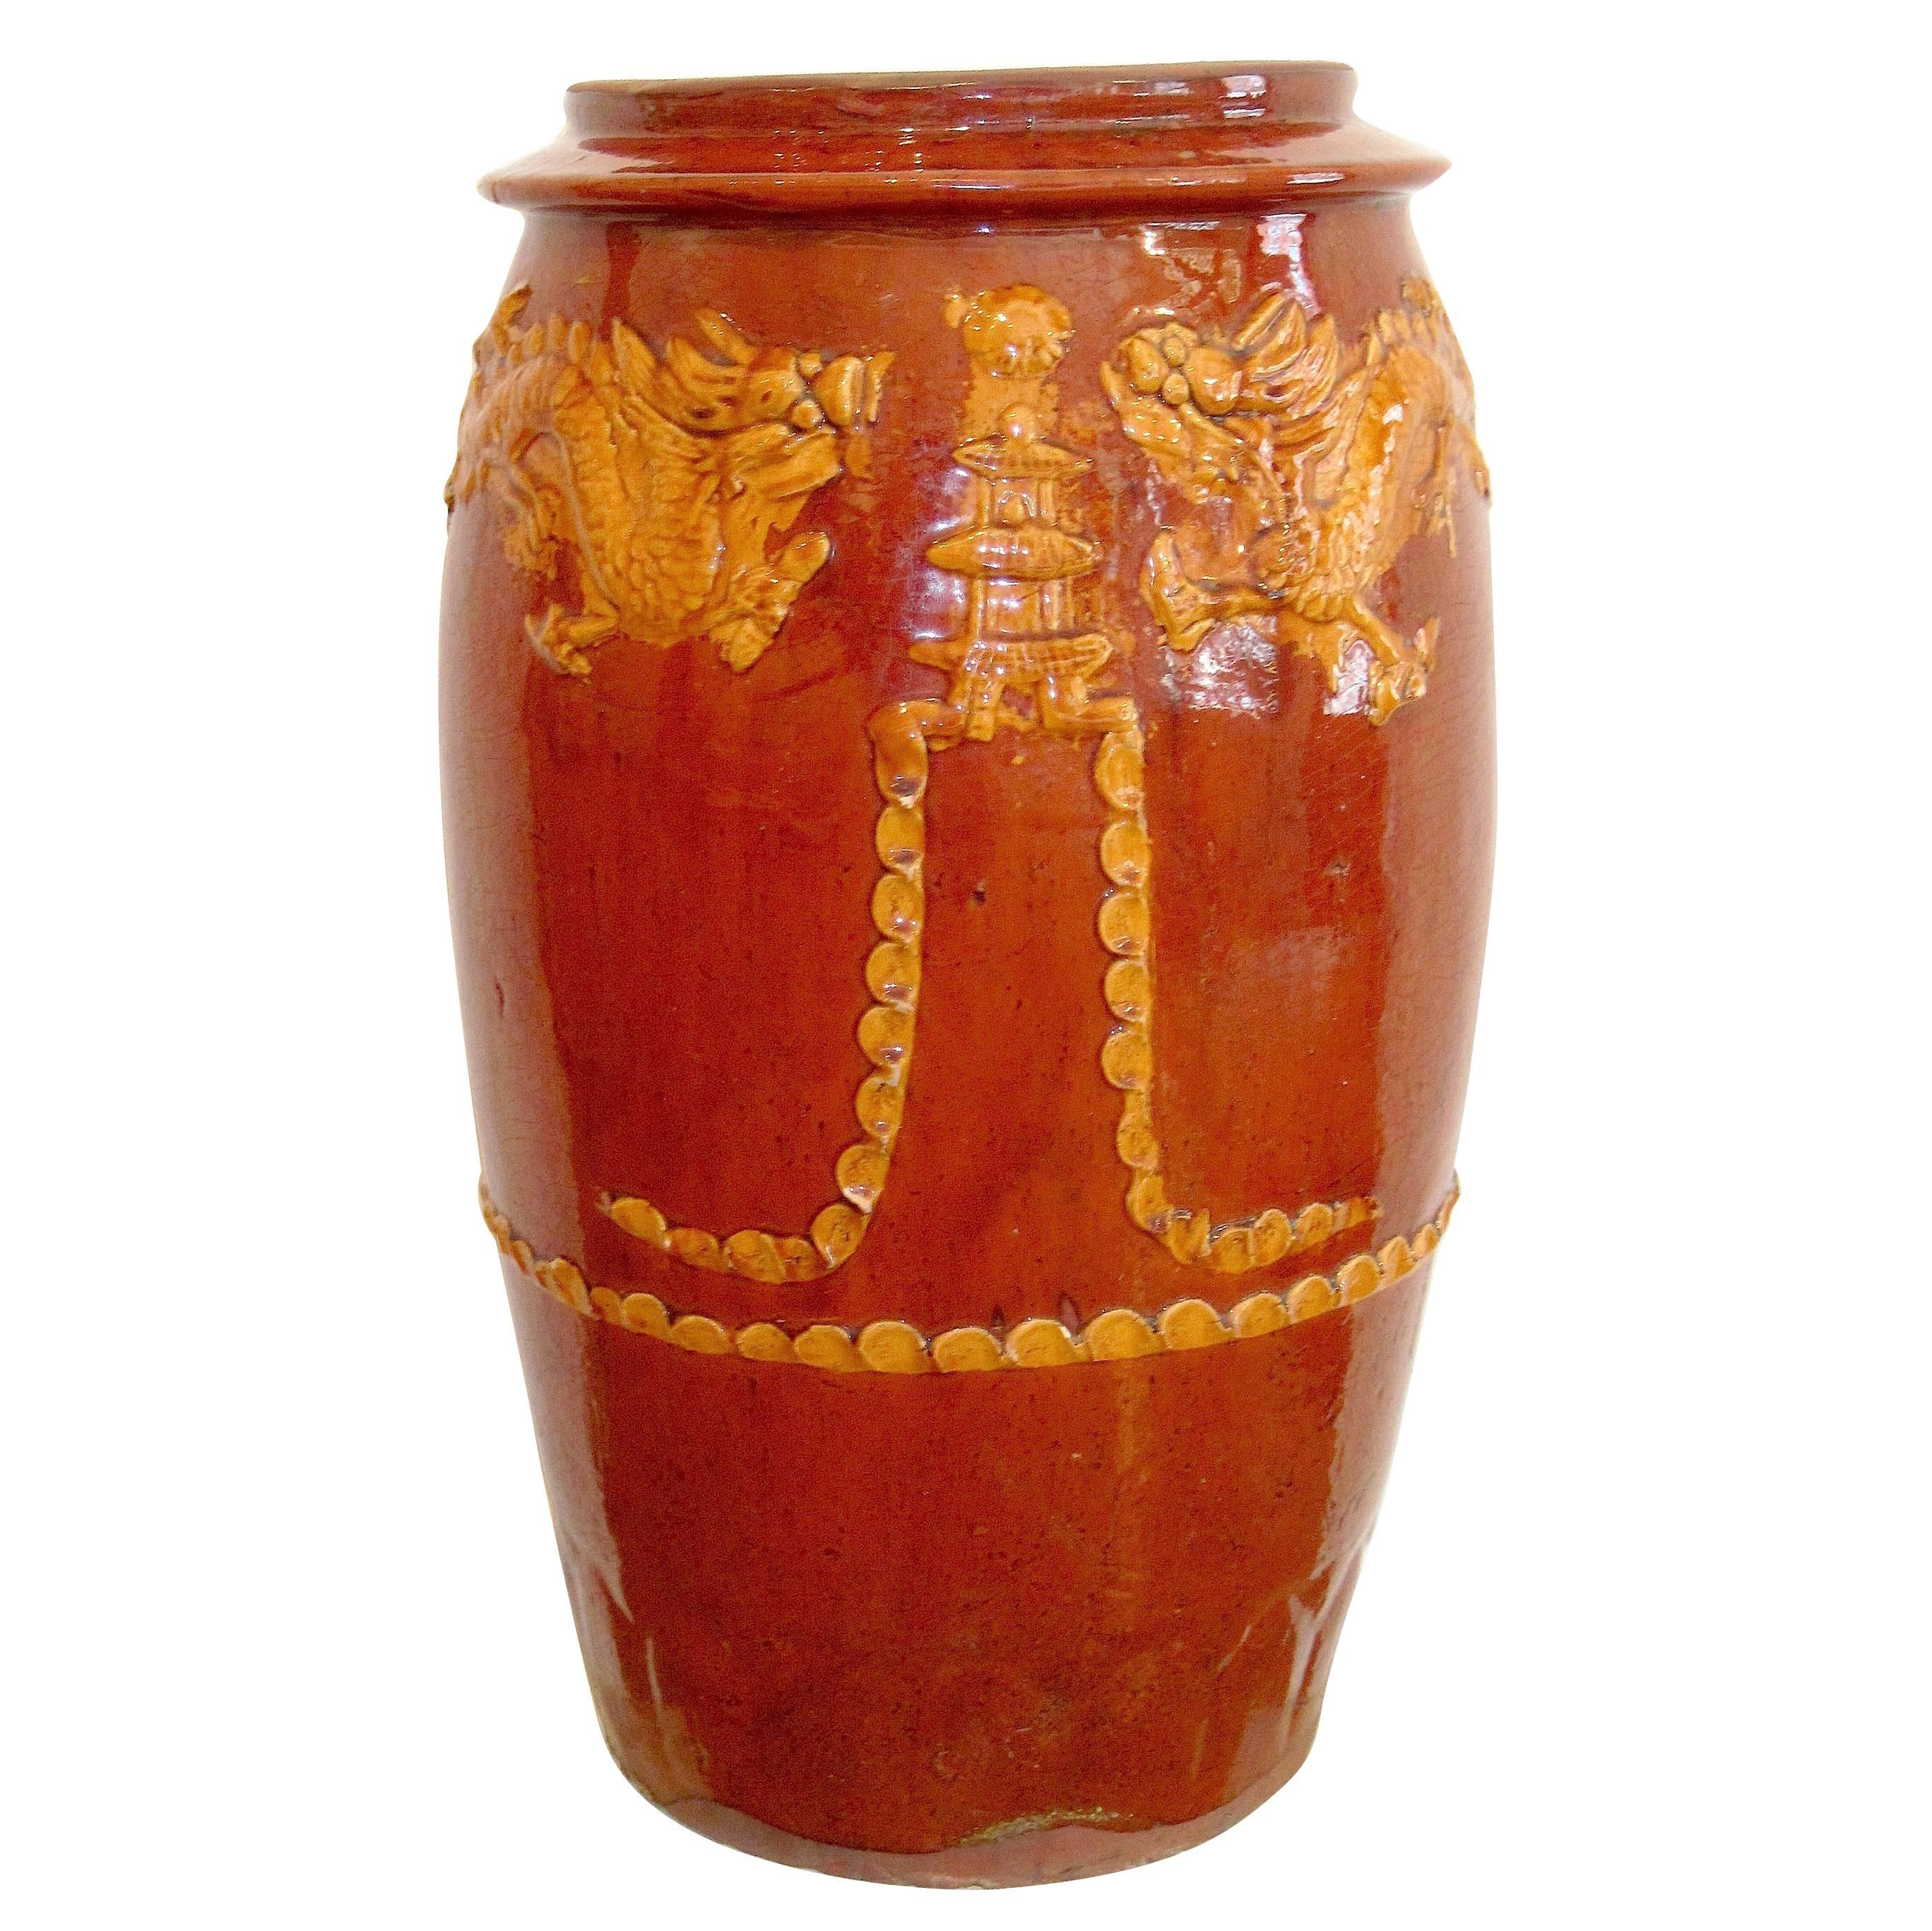 Outstanding Vintage Korean Terracotta Kimchi Storage Jar or Umbrella Stand